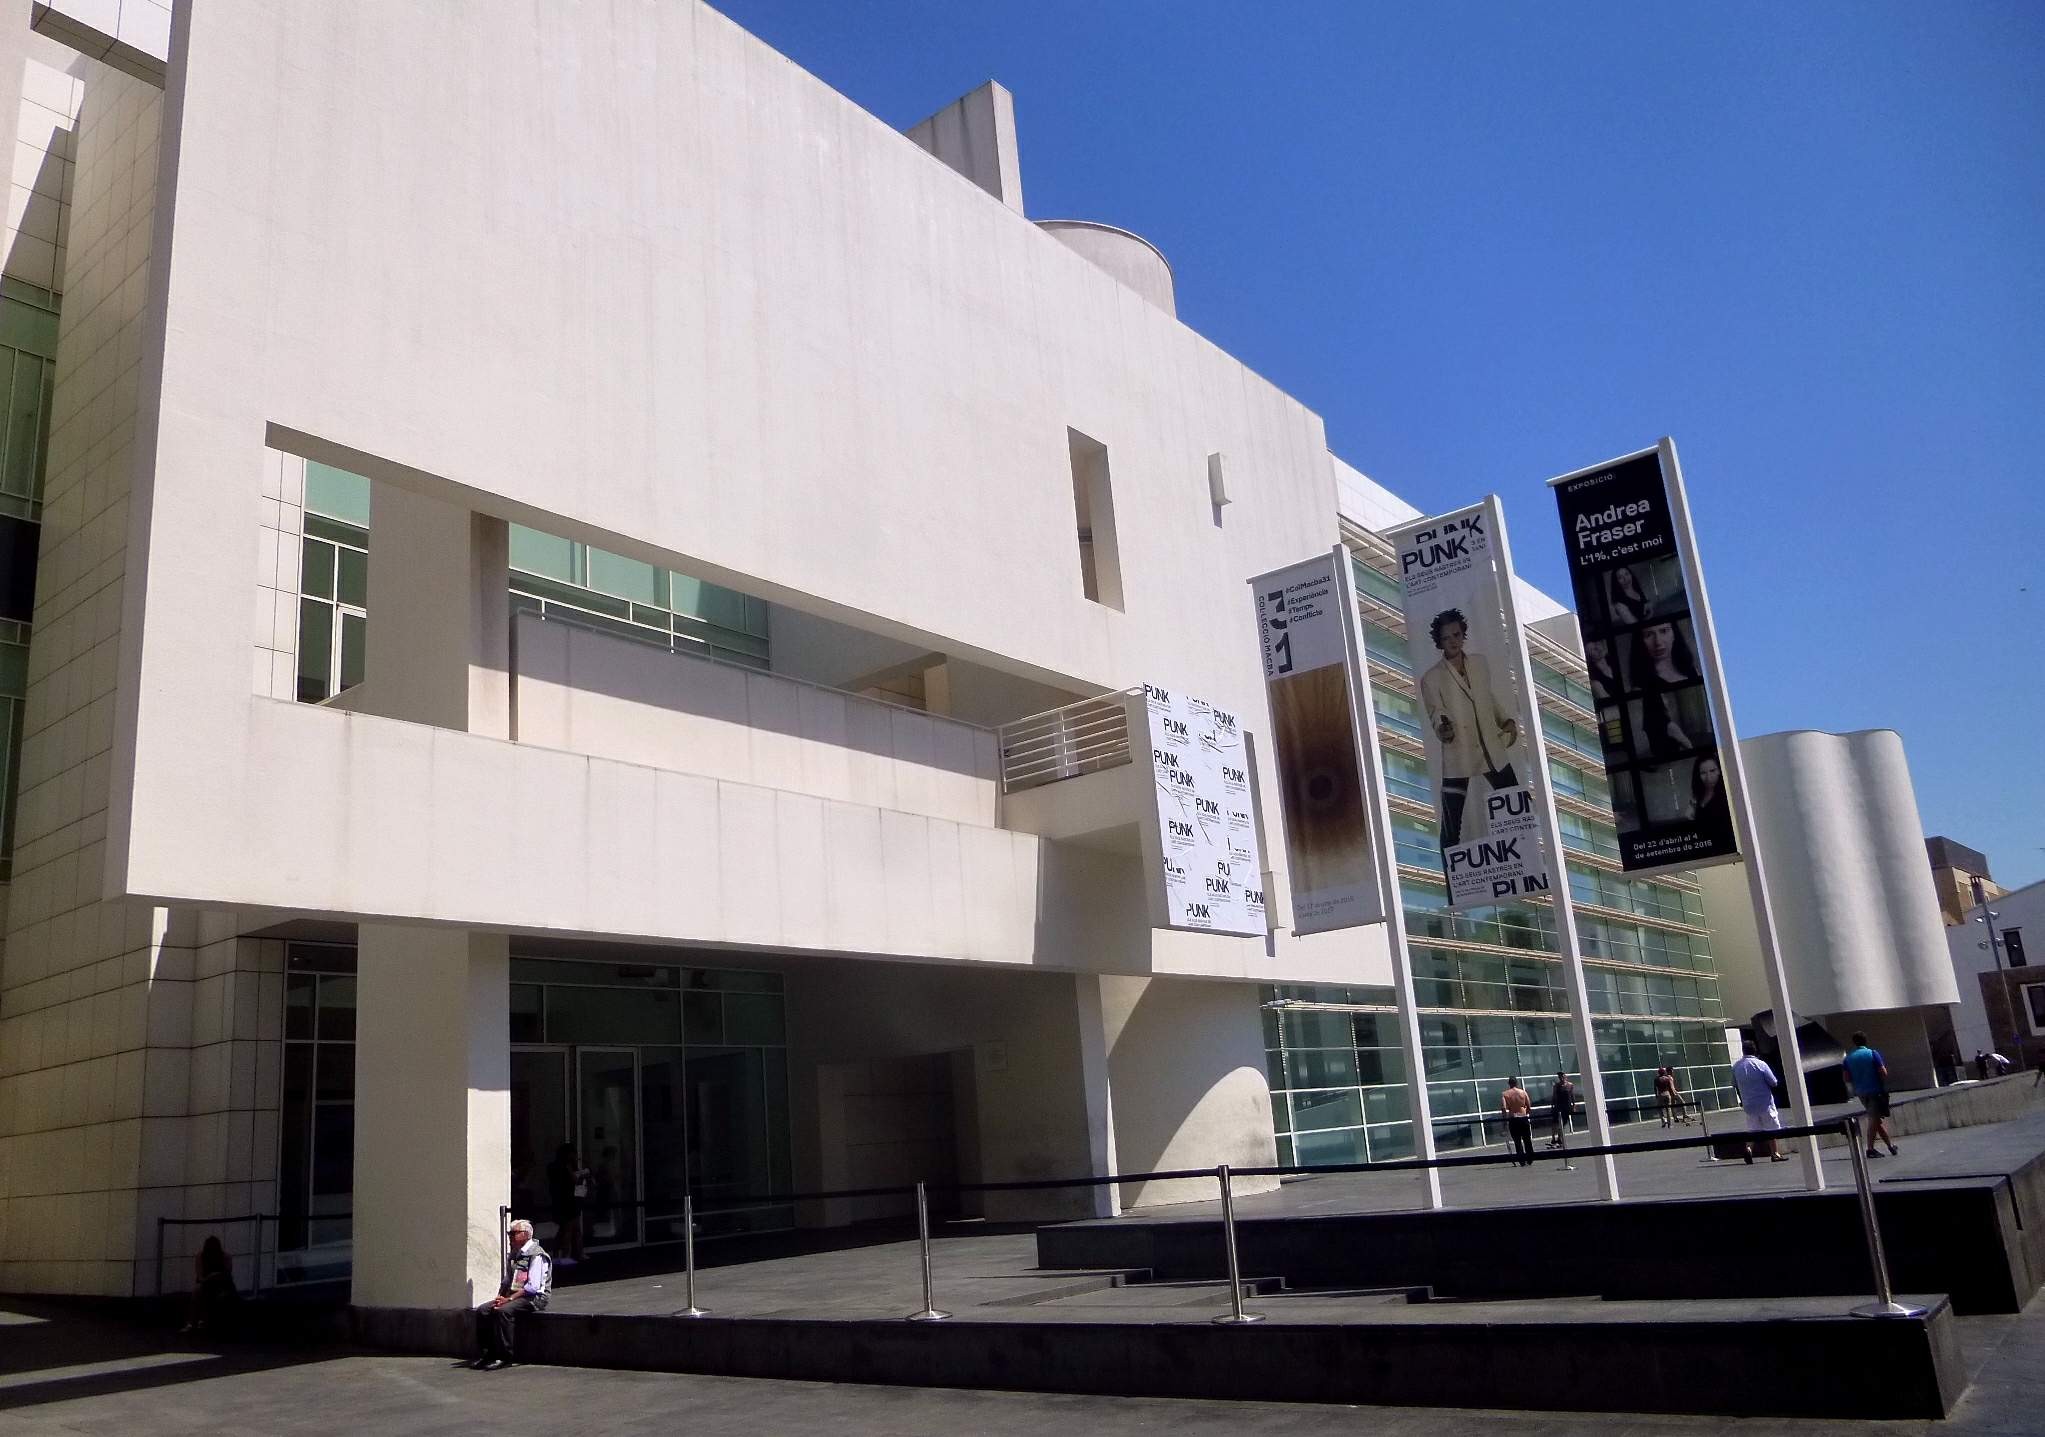 Museu d'Art Contemporani de Barcelona (MACBA): All Year